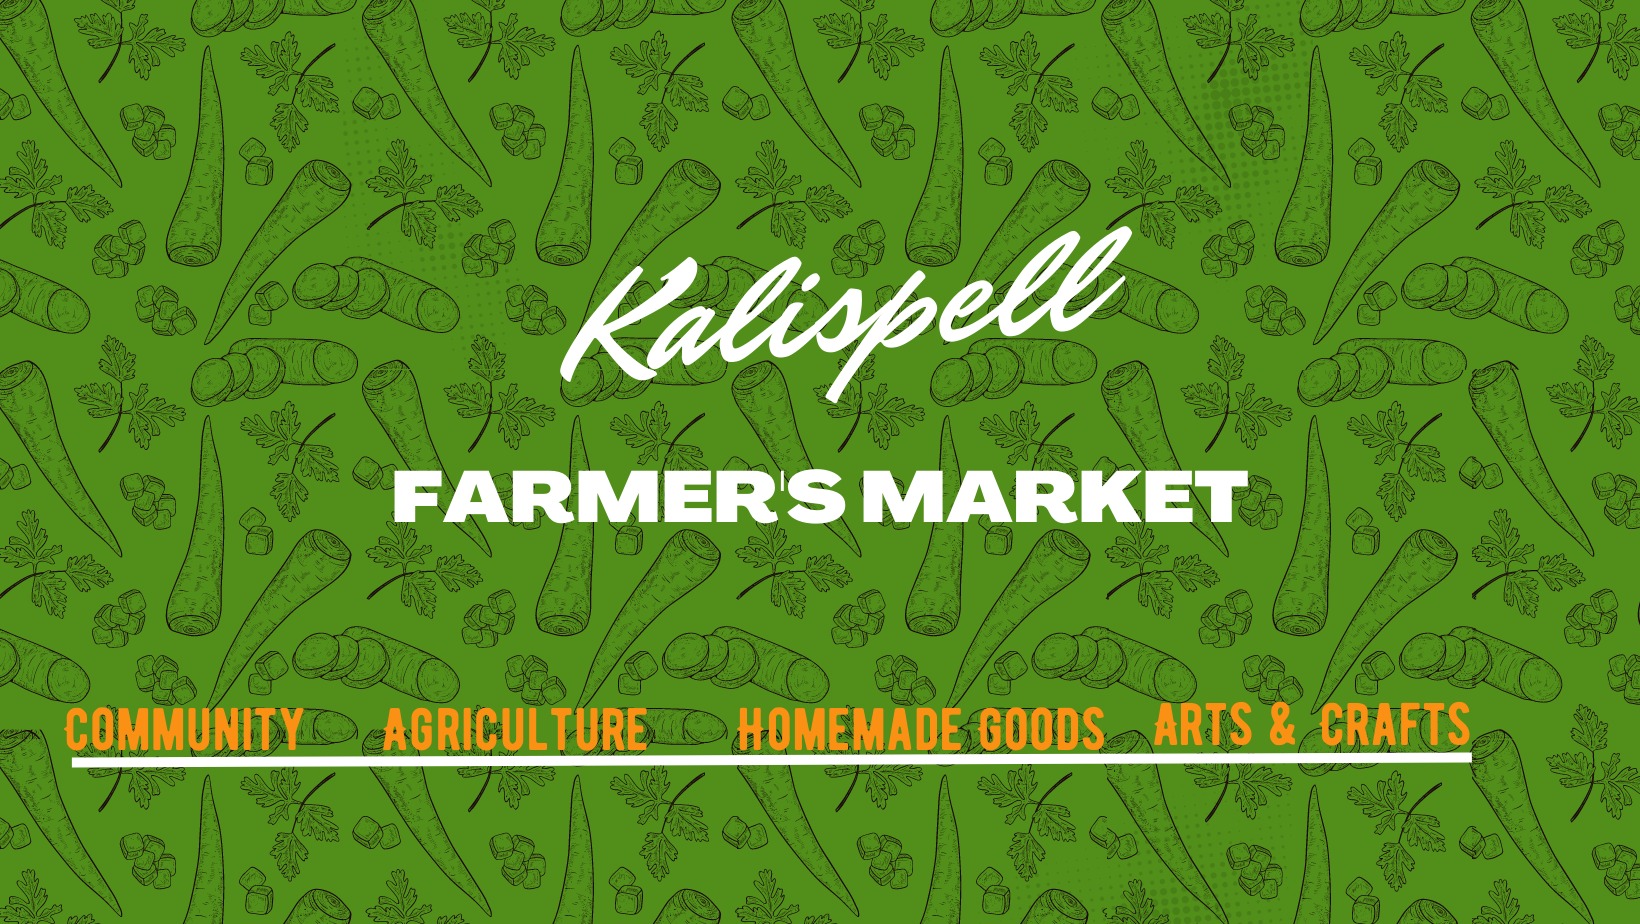 Kalispell Farmer's Market in Kalispell Montana